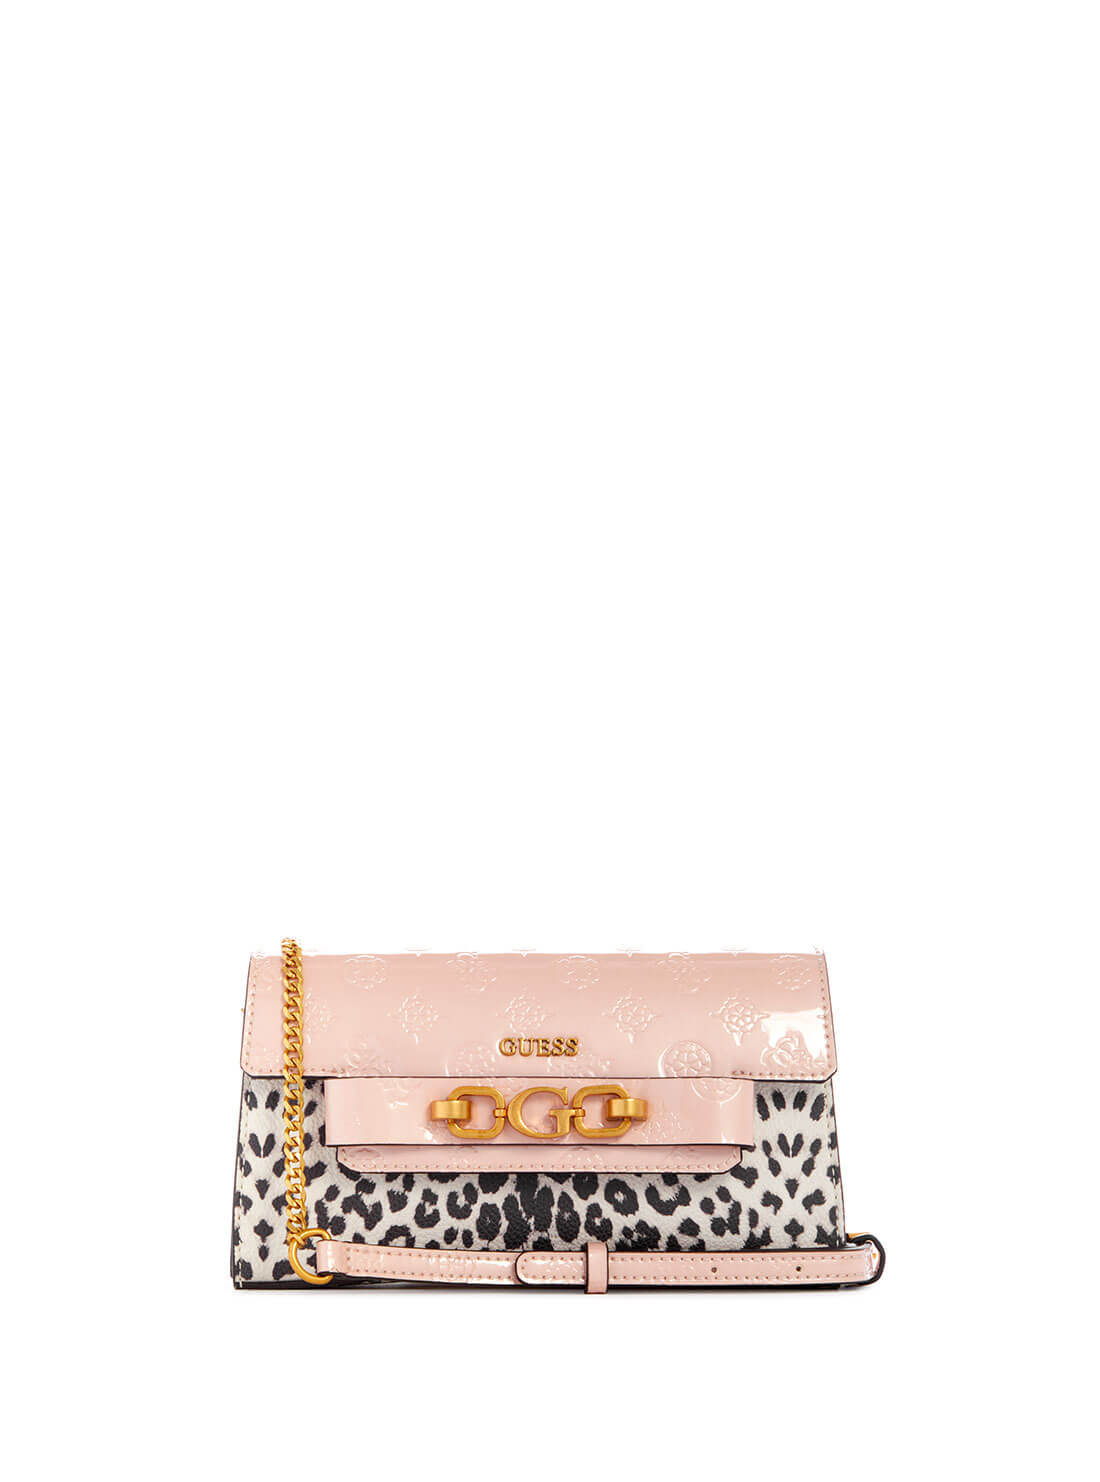 GUESS Womens Pink Leopard Zira Mini Crossbody Bag LA848478 Front View